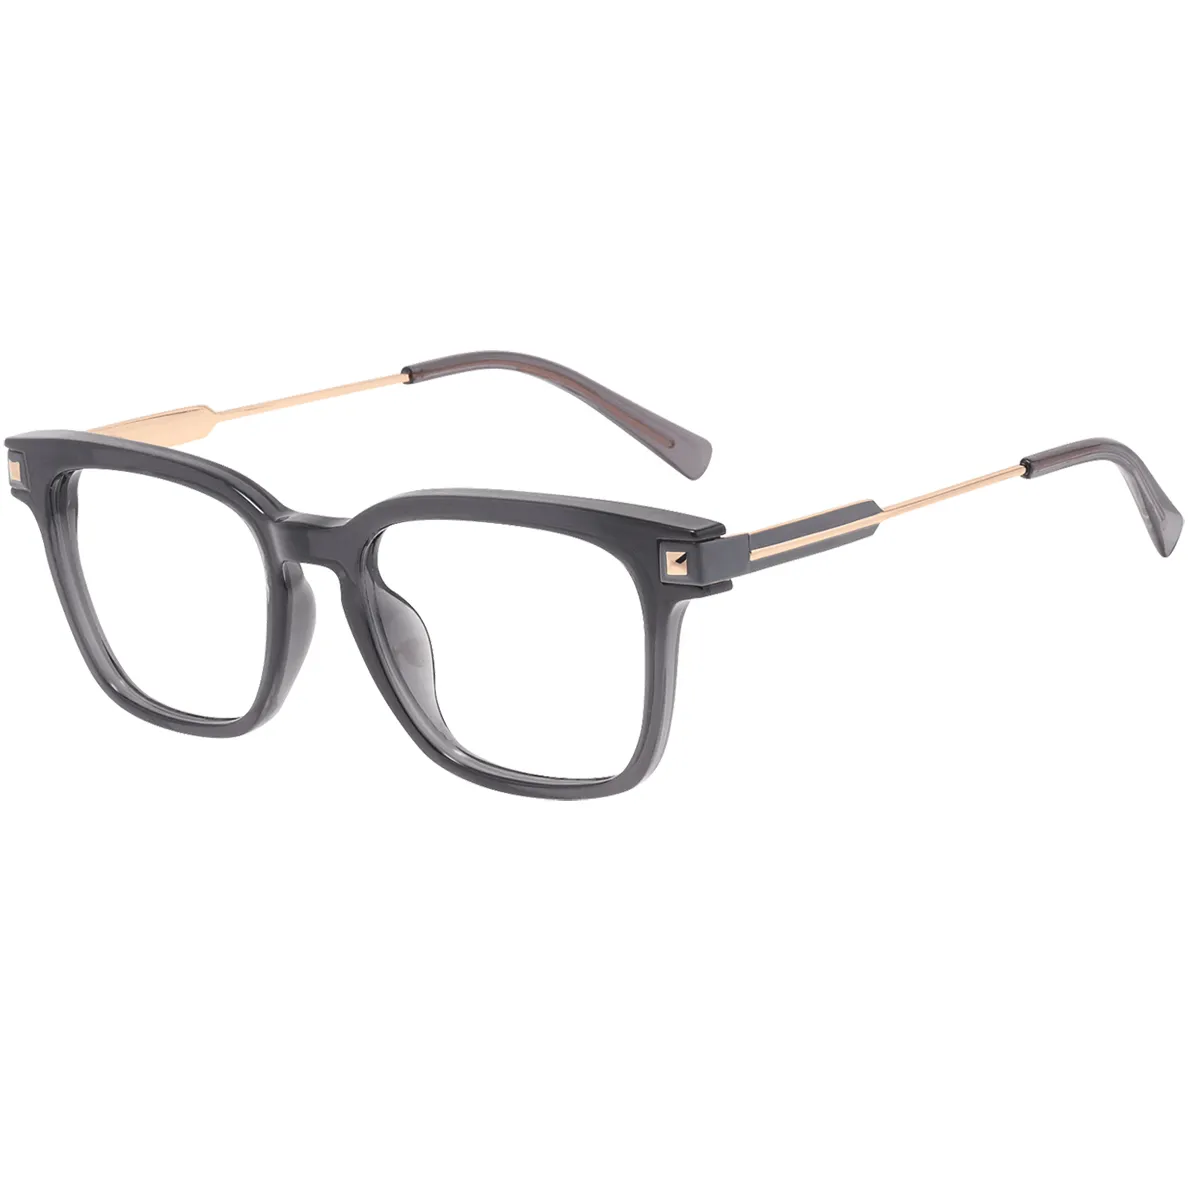 Keith - Square Gray Glasses for Men - EFE